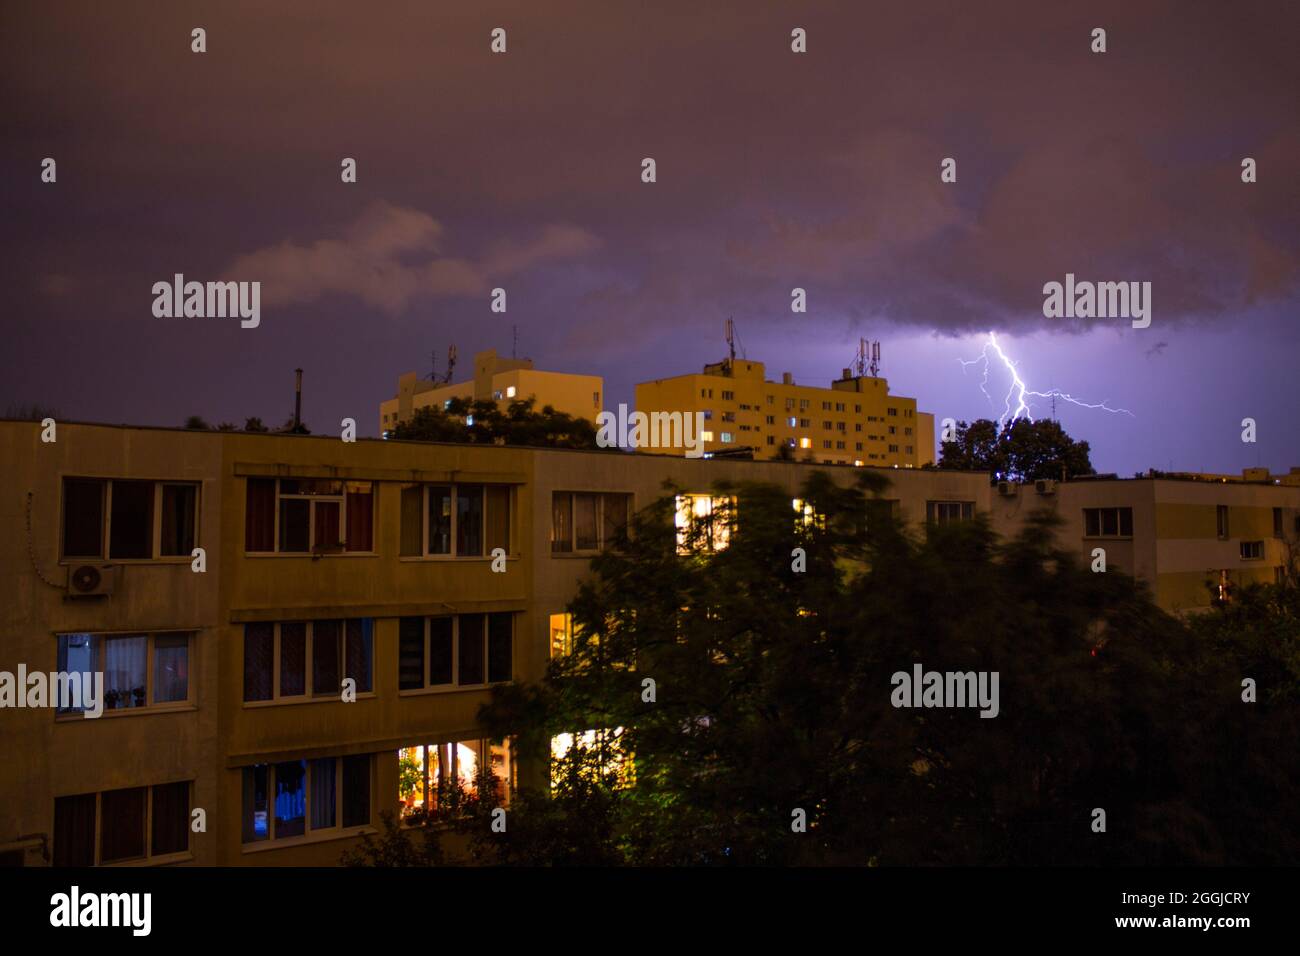 Bucharest neighbourhood during a thunderstorm at night. Stock Photo